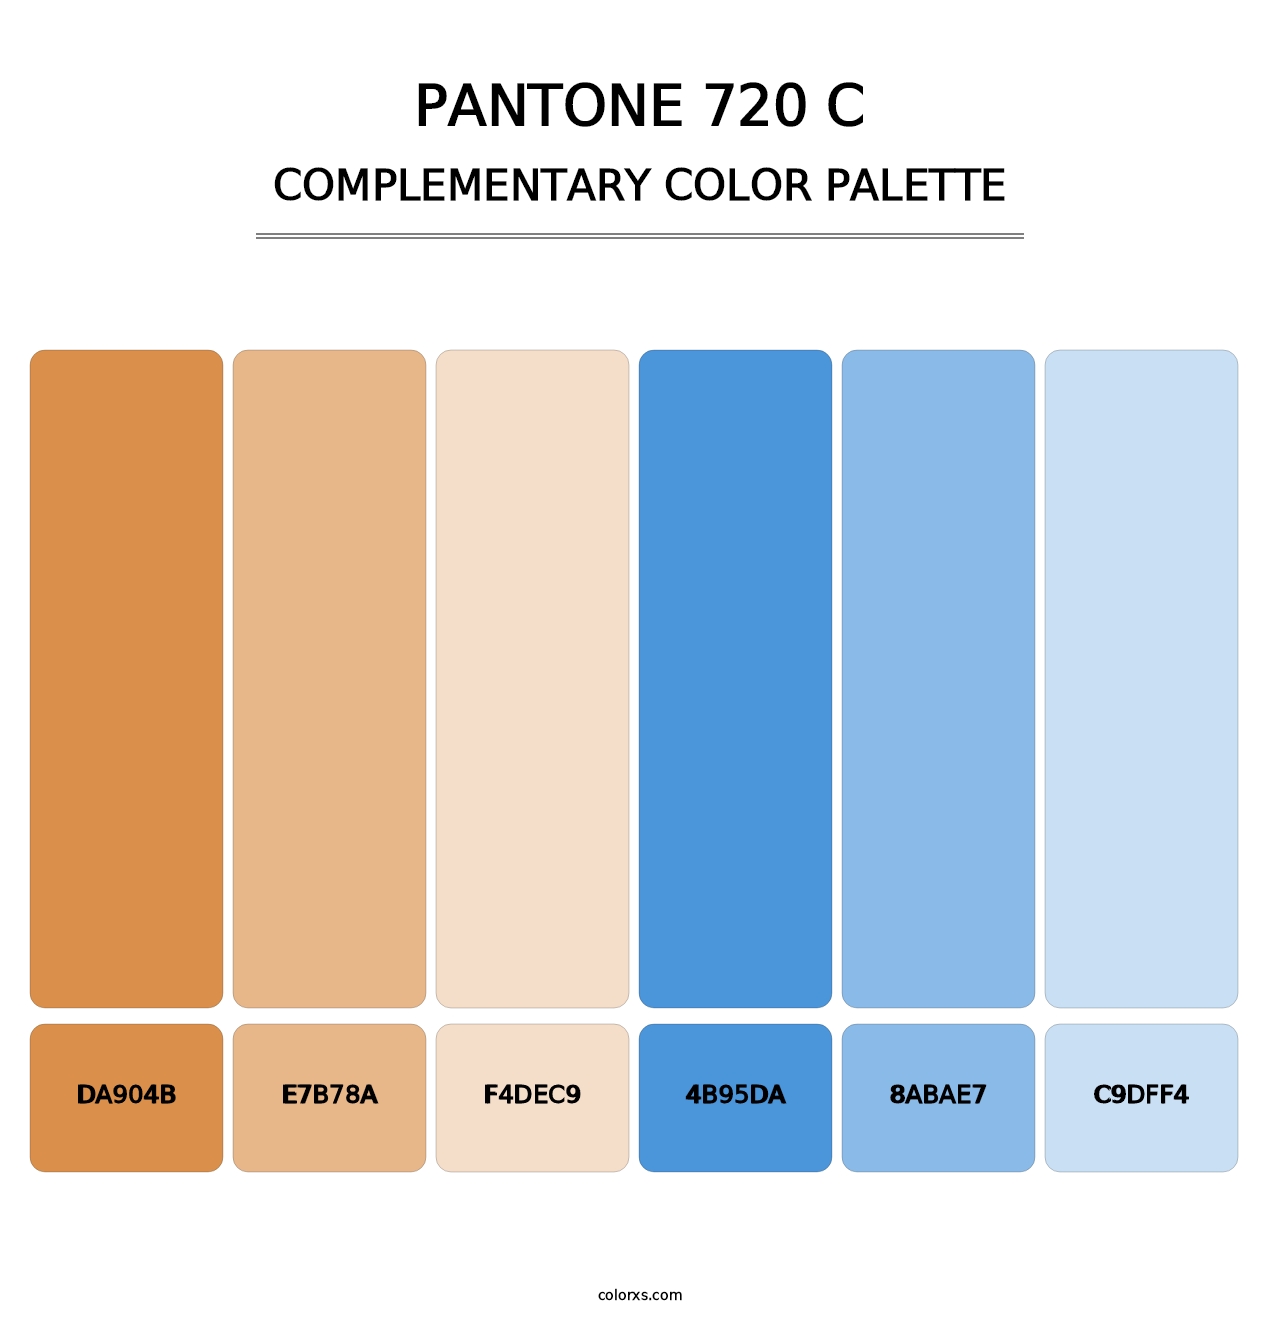 PANTONE 720 C - Complementary Color Palette